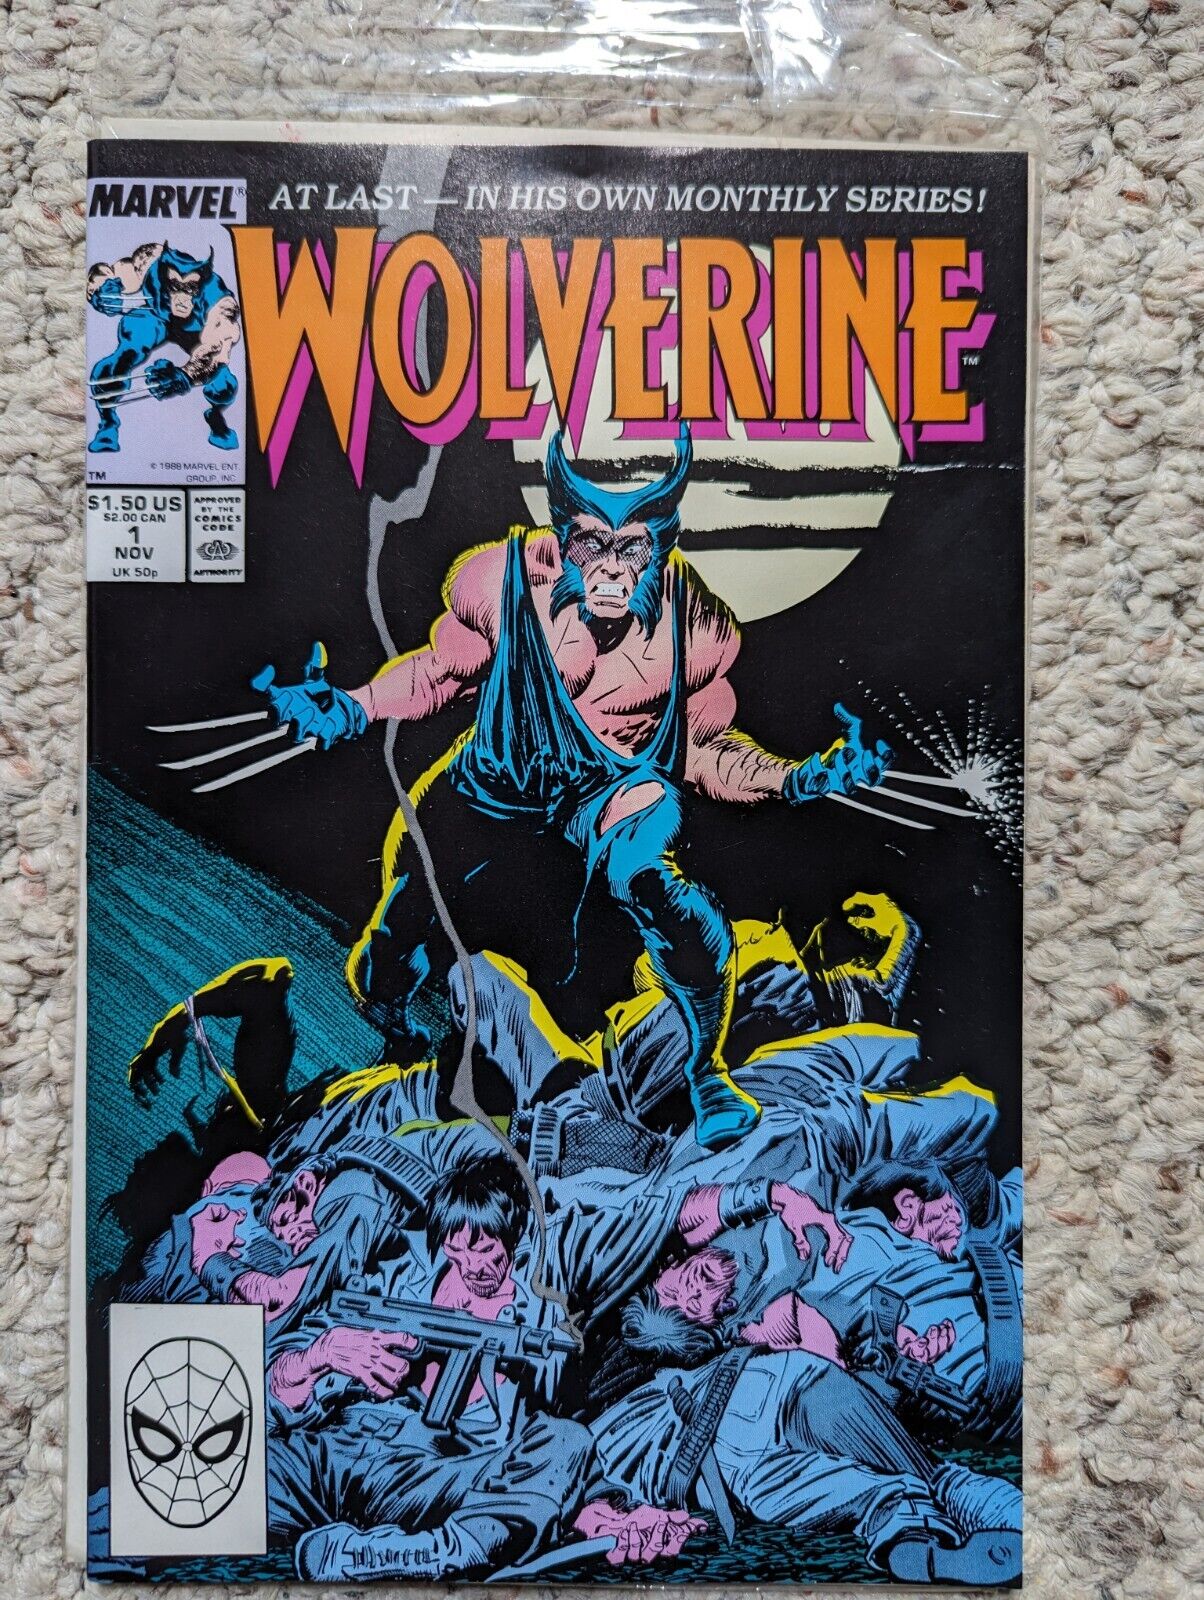 Wolverine #1 (Marvel Comics November 1988)